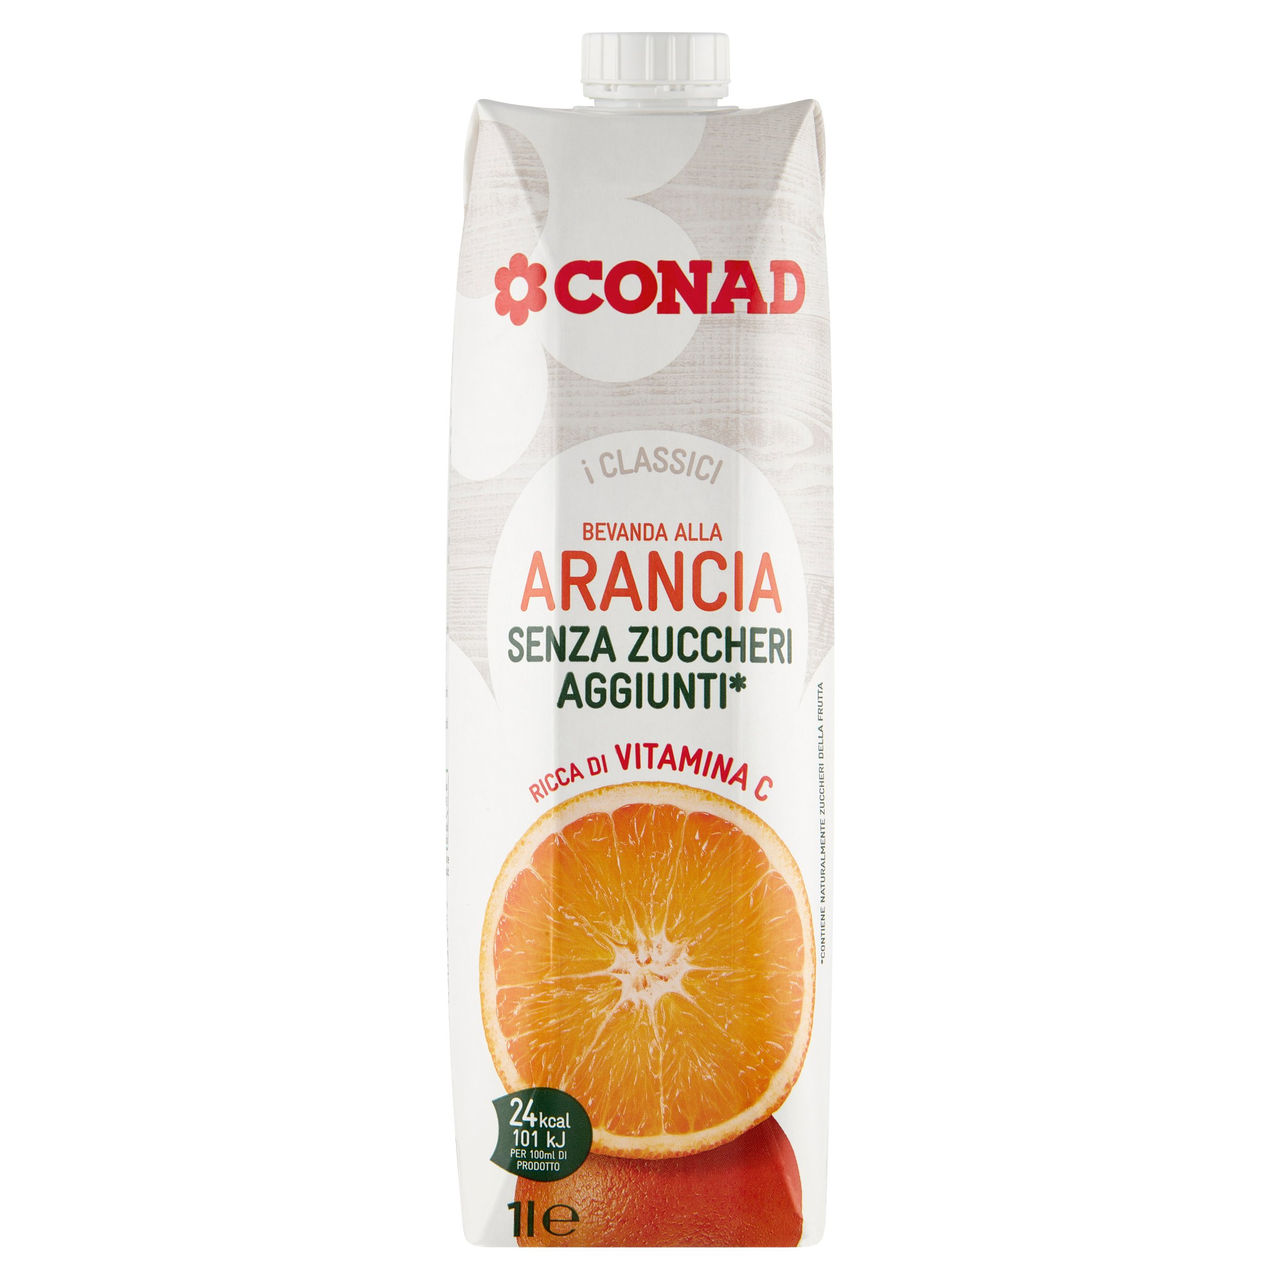 Bevanda all'arancia Conad in vendita online